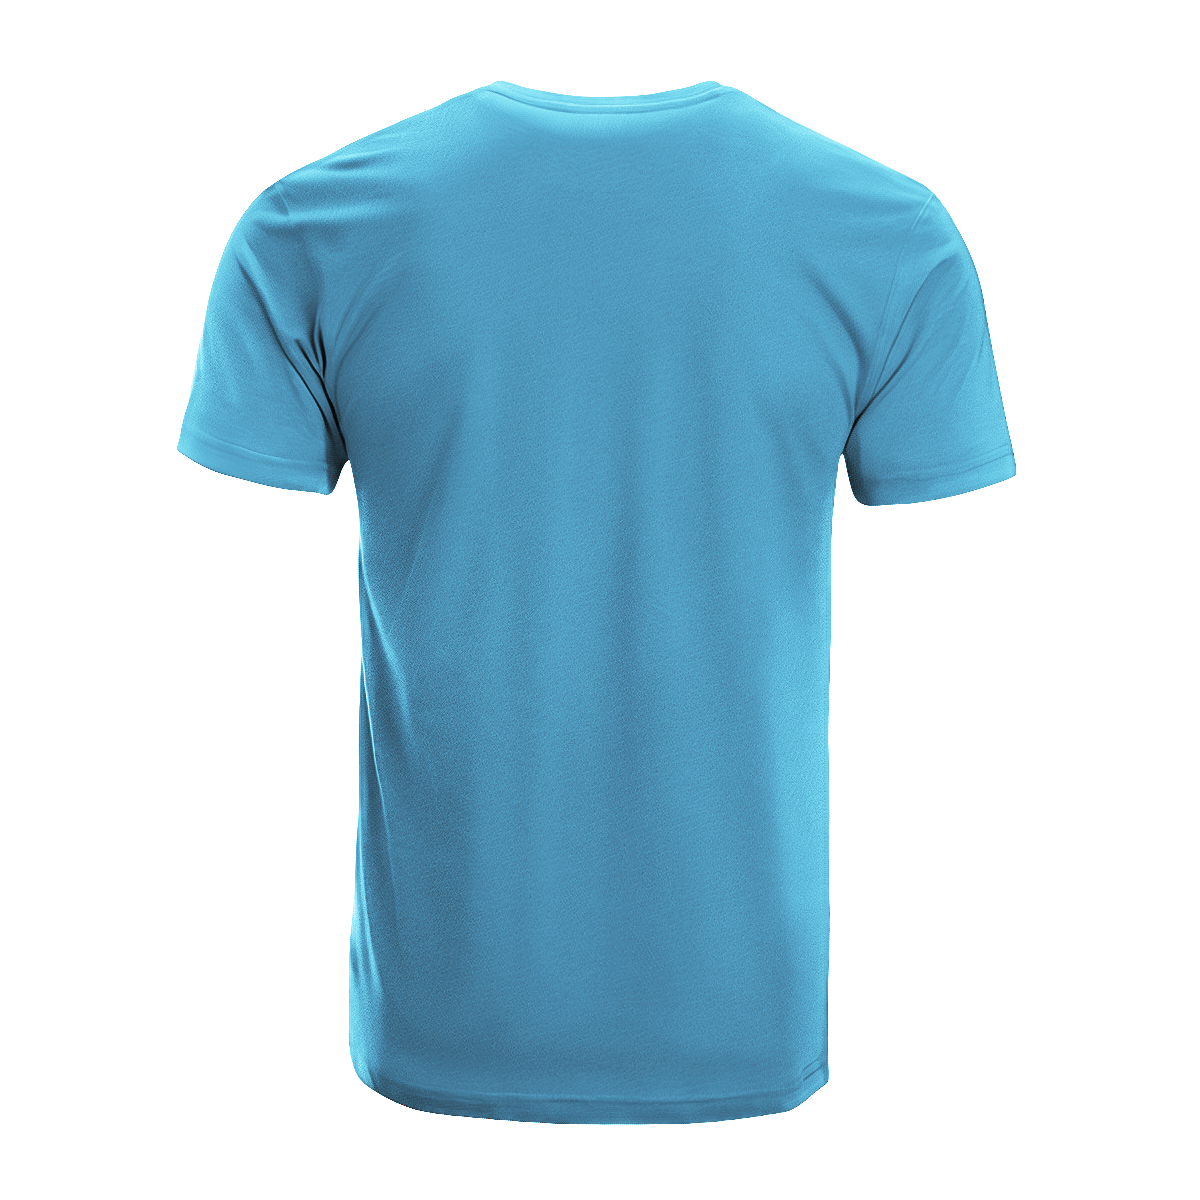 Strang (or Strange) Tartan Crest T-shirt - I'm not yelling style